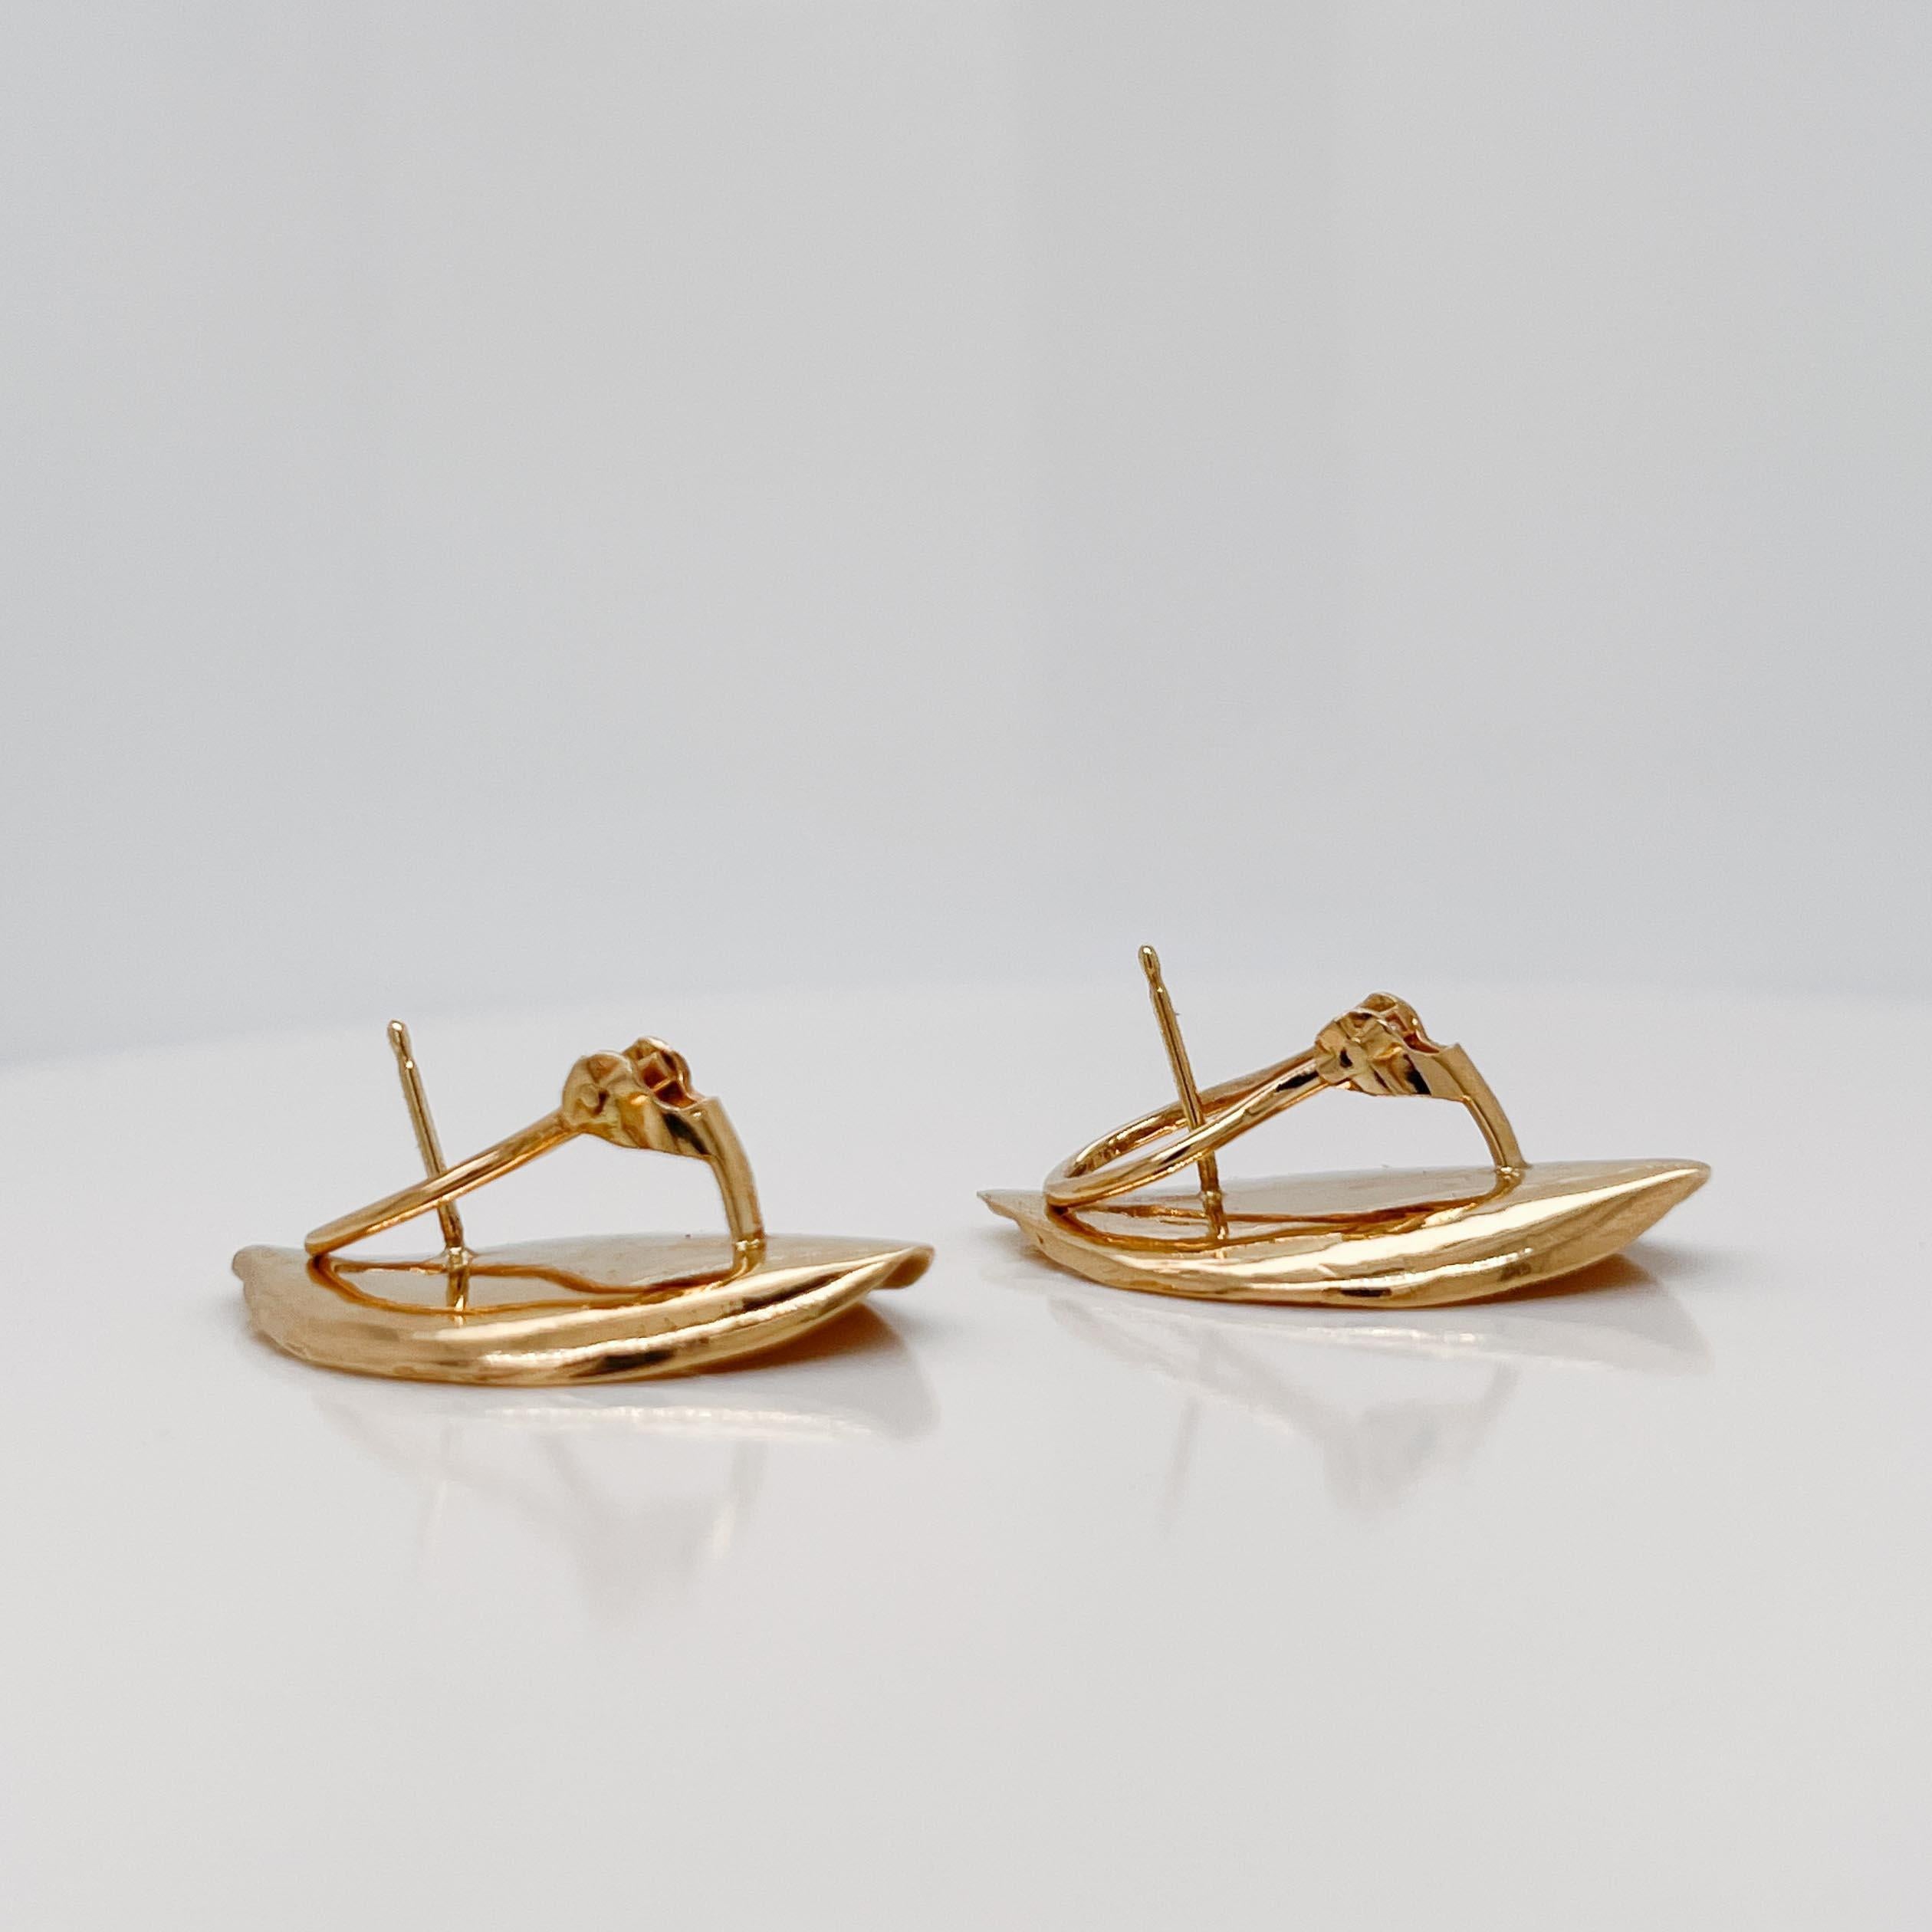 Organic Modern 14 Karat Gold Leaf-Shaped Post Earrings In Good Condition For Sale In Philadelphia, PA